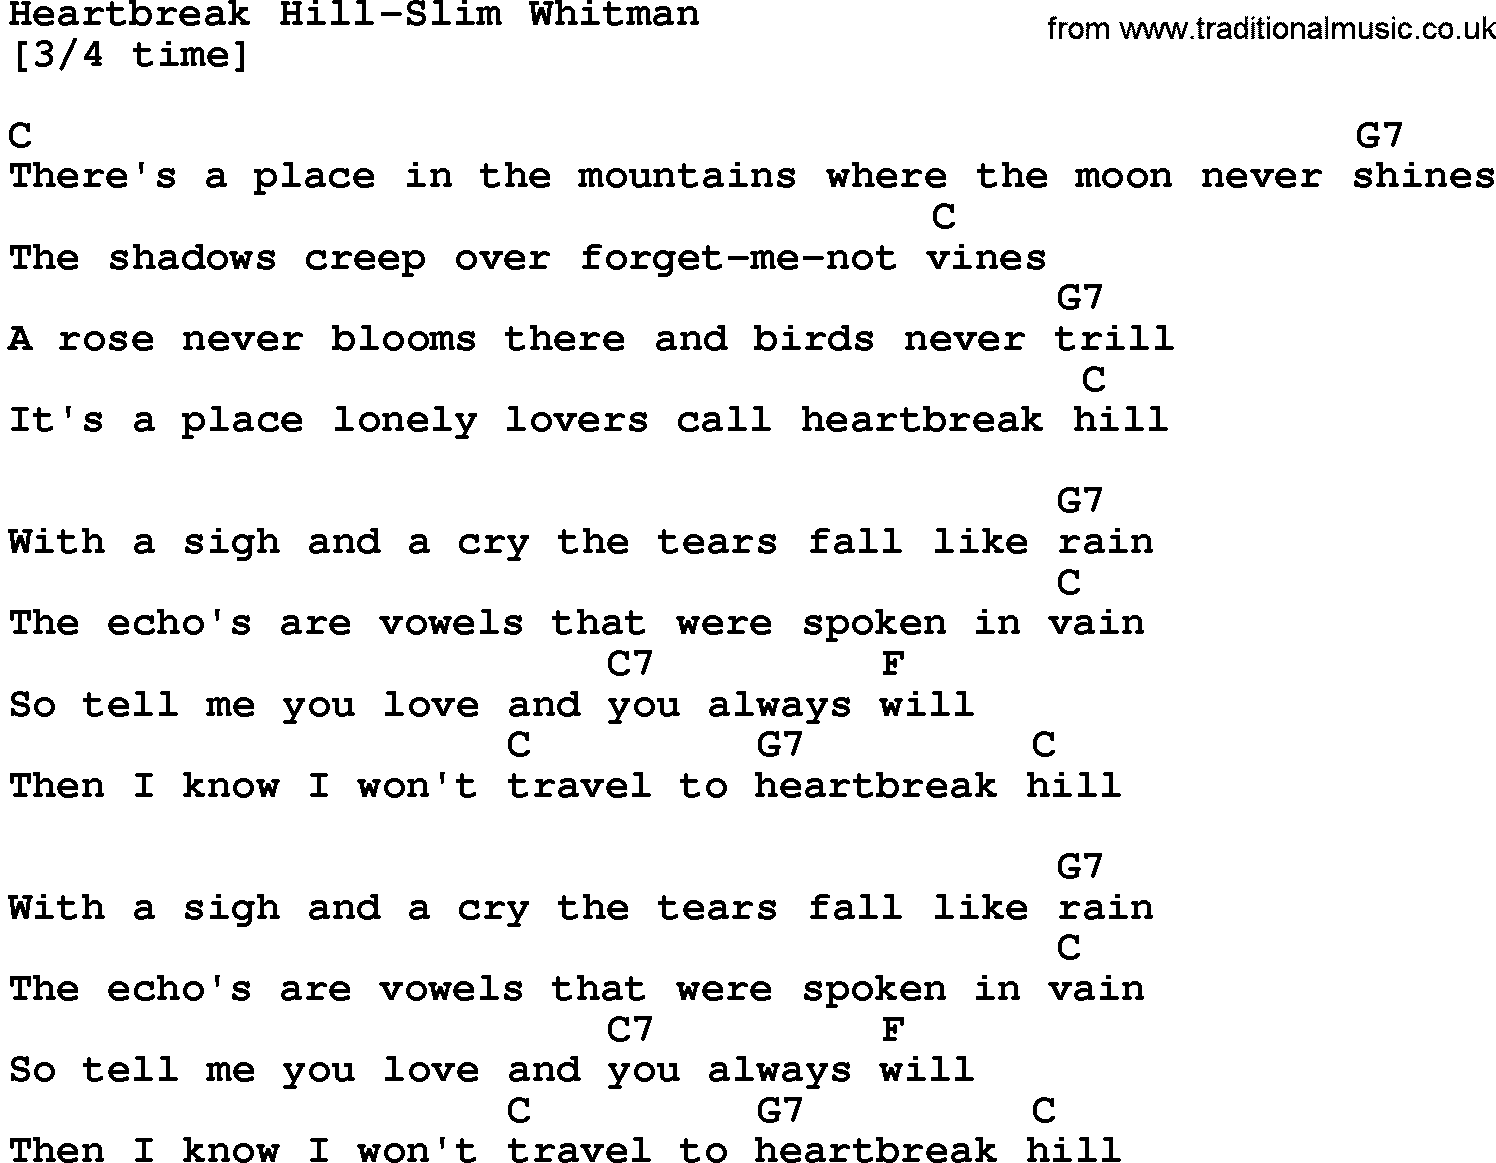 Country music song: Heartbreak Hill-Slim Whitman lyrics and chords